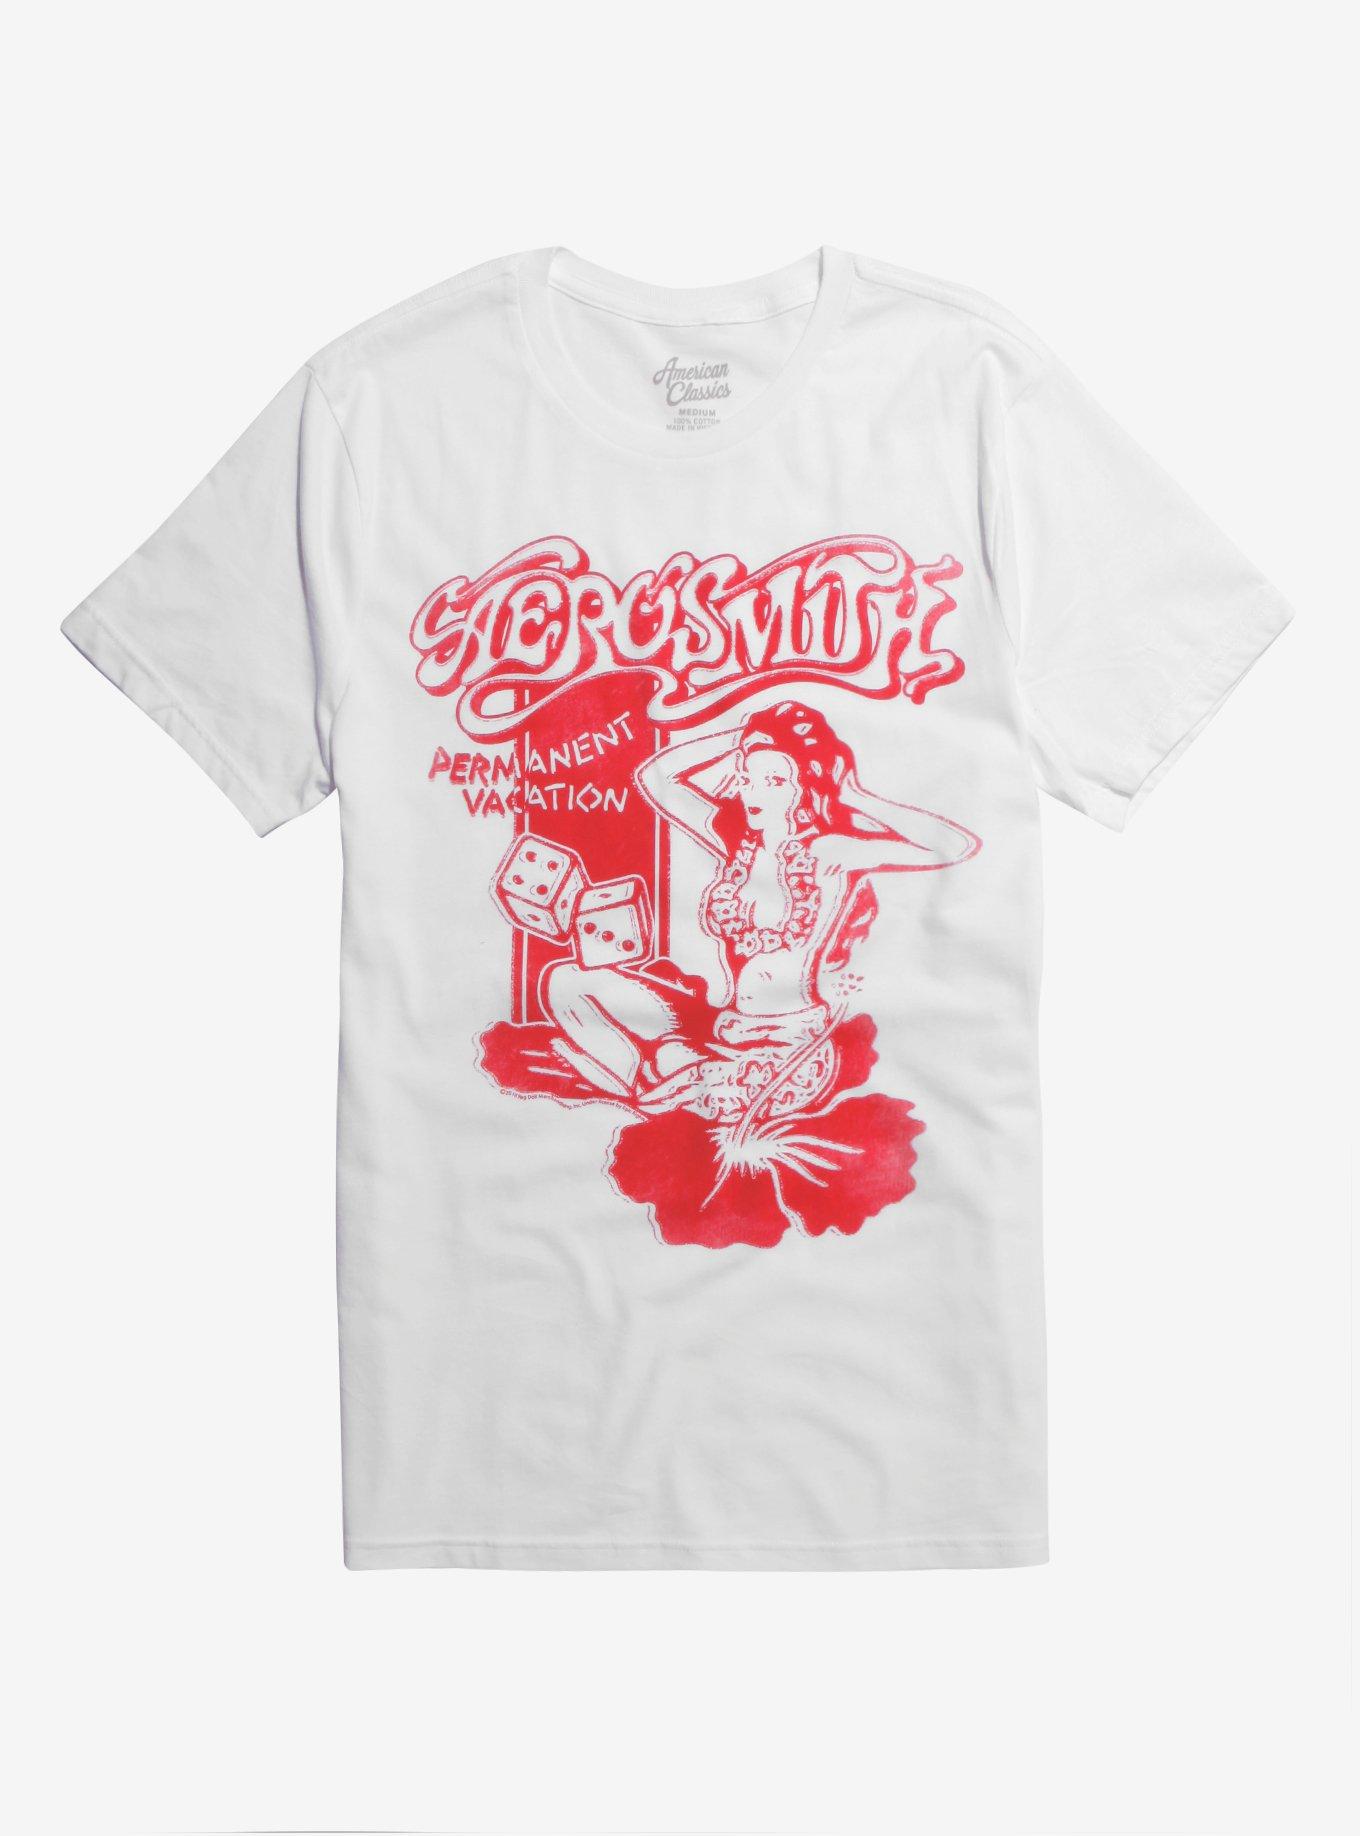 Aerosmith Permanent Vacation T-Shirt, WHITE, hi-res